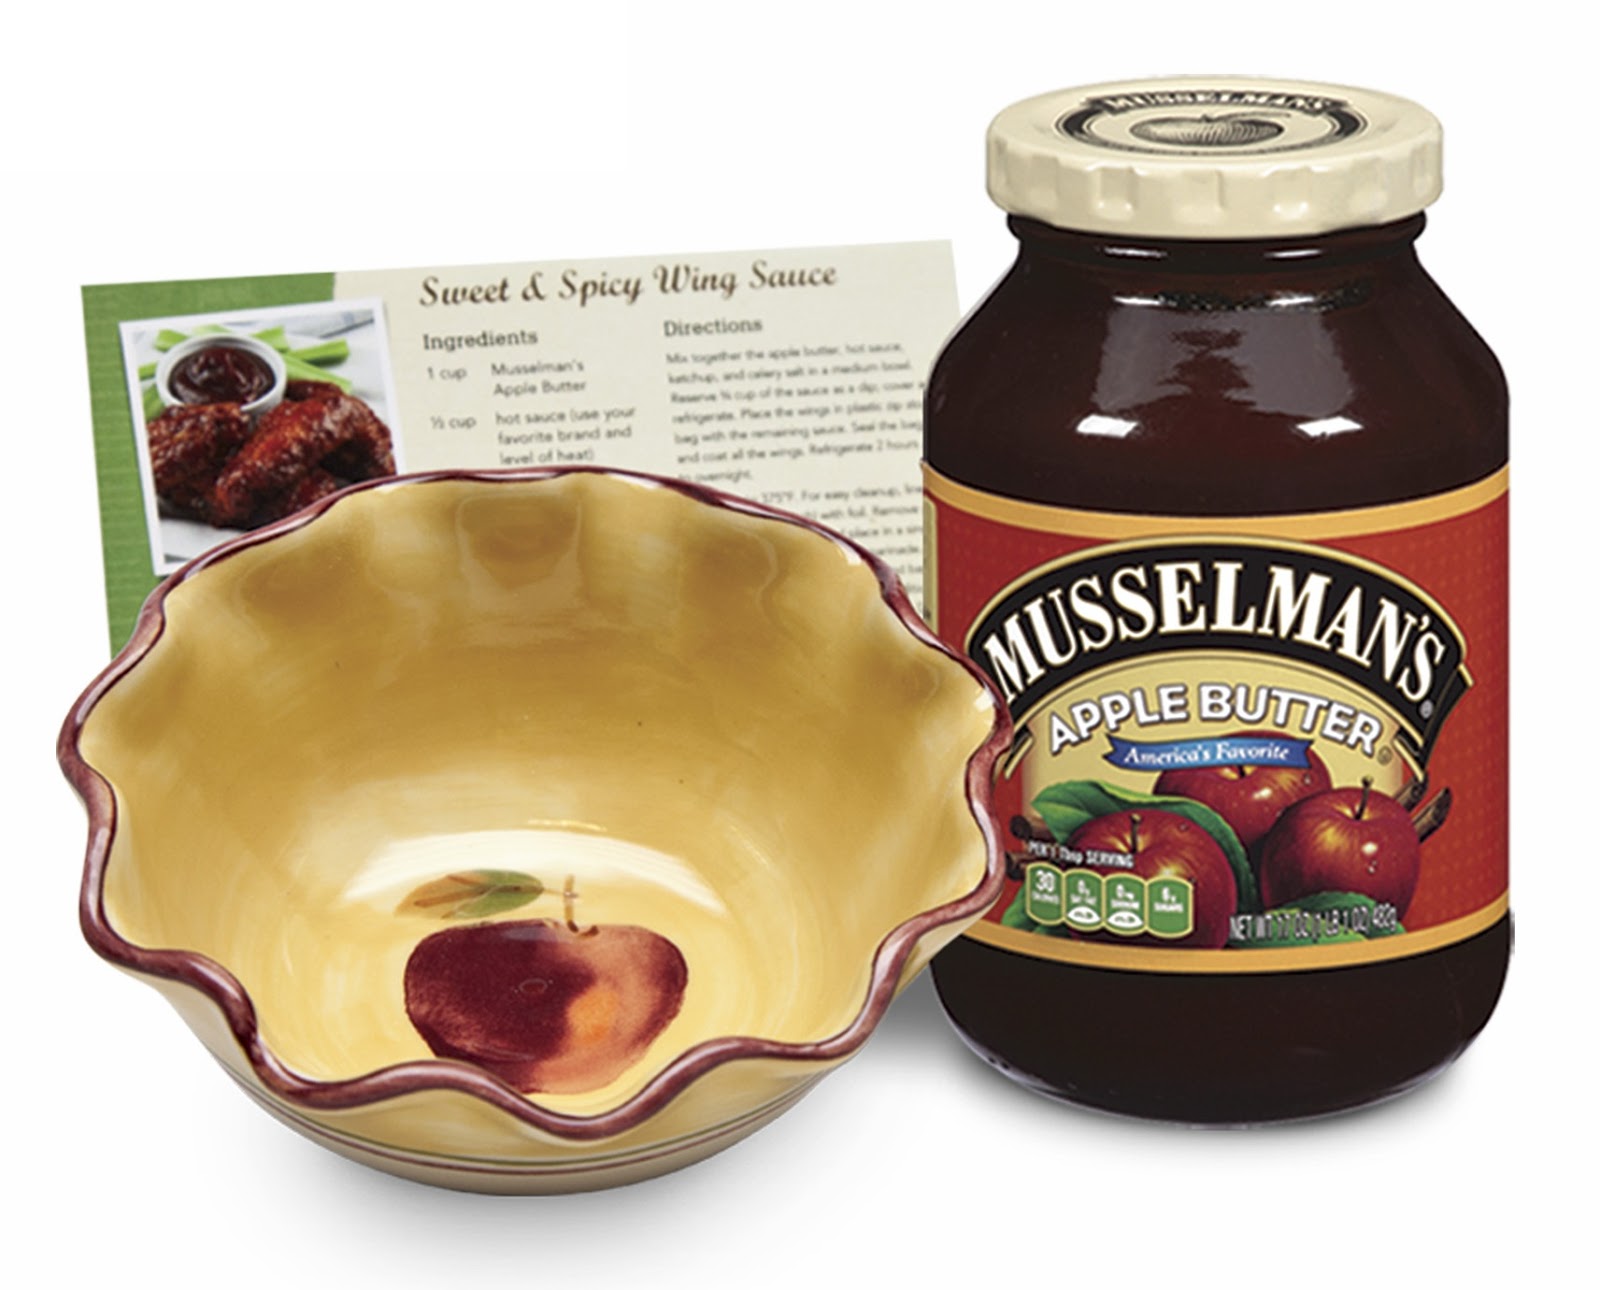 Musselman's Apple Butter giveaway